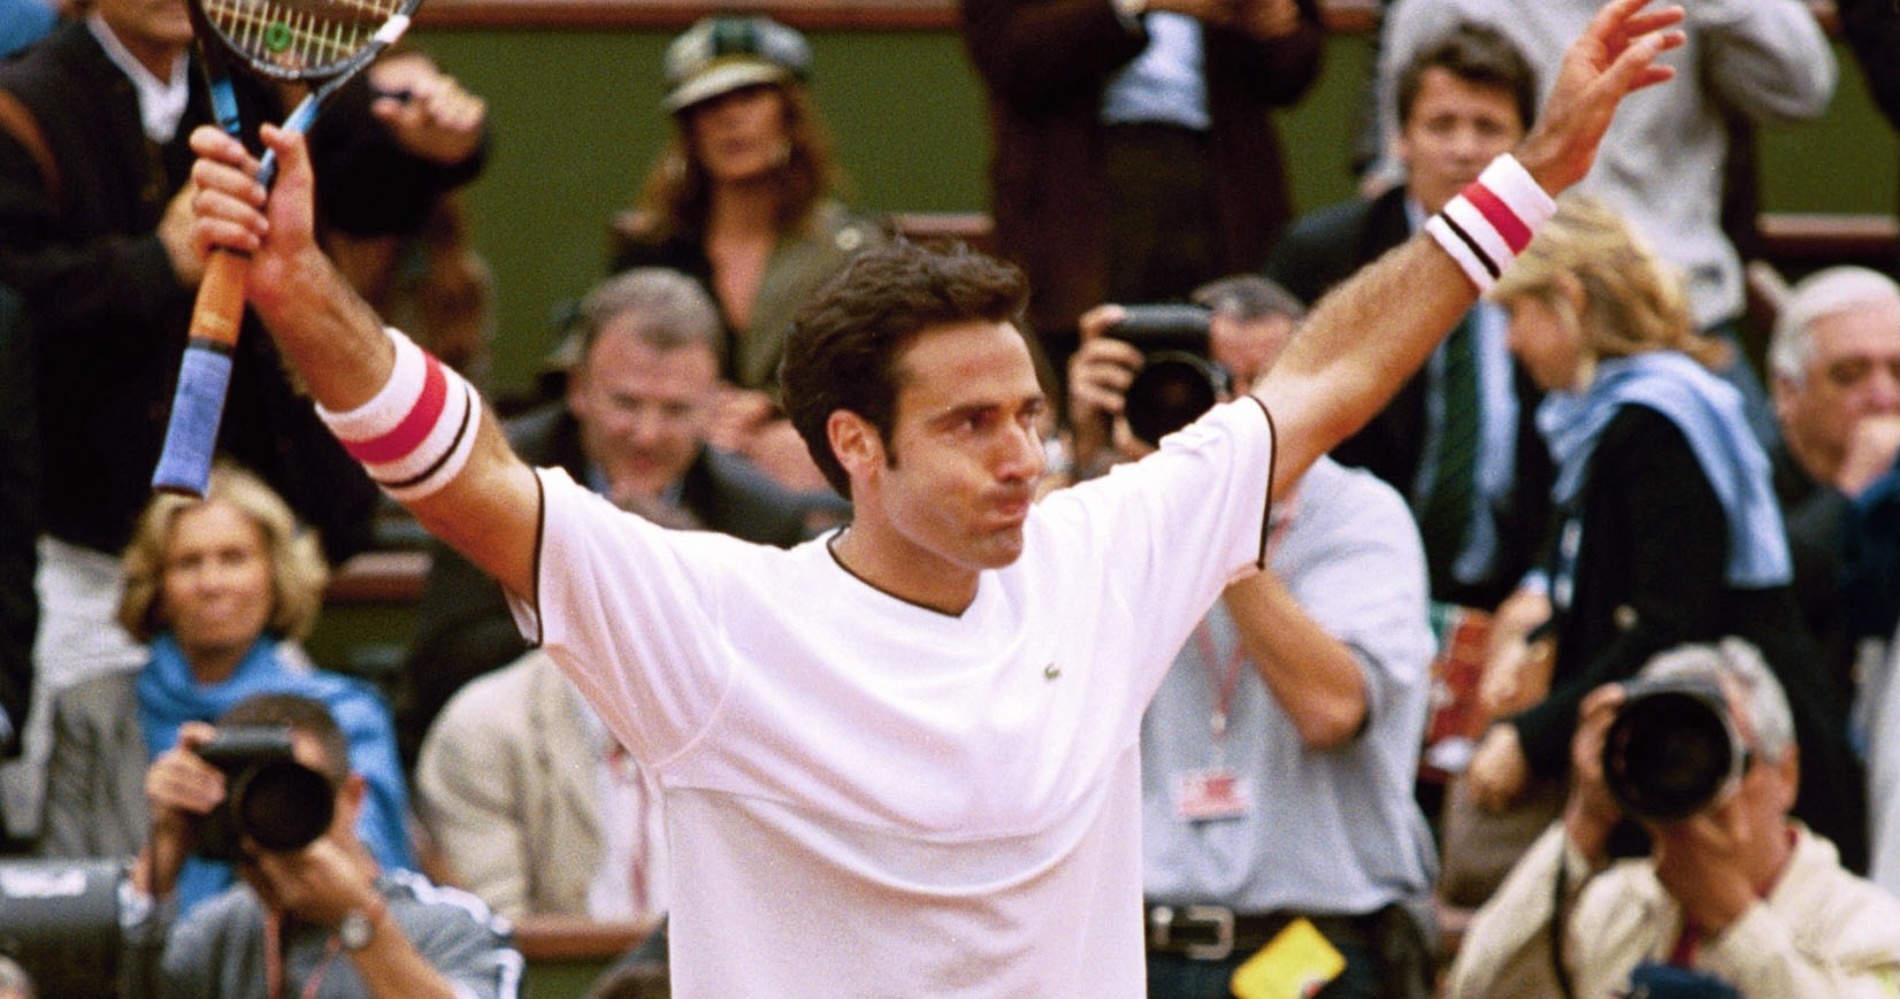 Alex Corretja, 2001 French Open runner-up